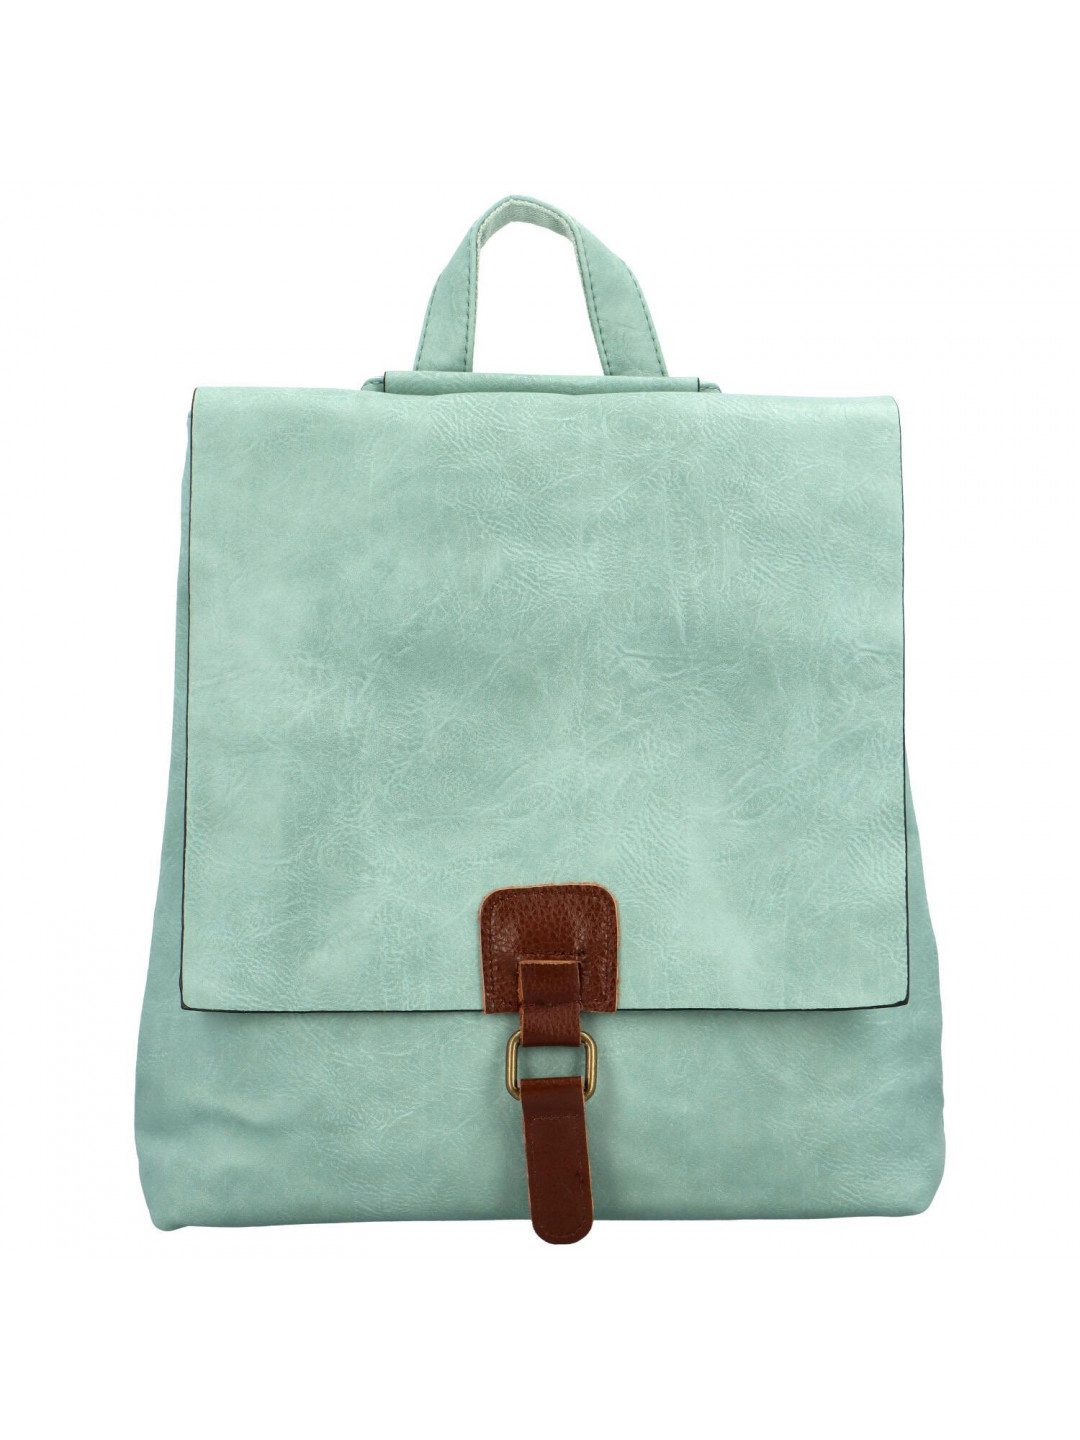 Dámský kabelko batoh zelený – Paolo bags Olefir